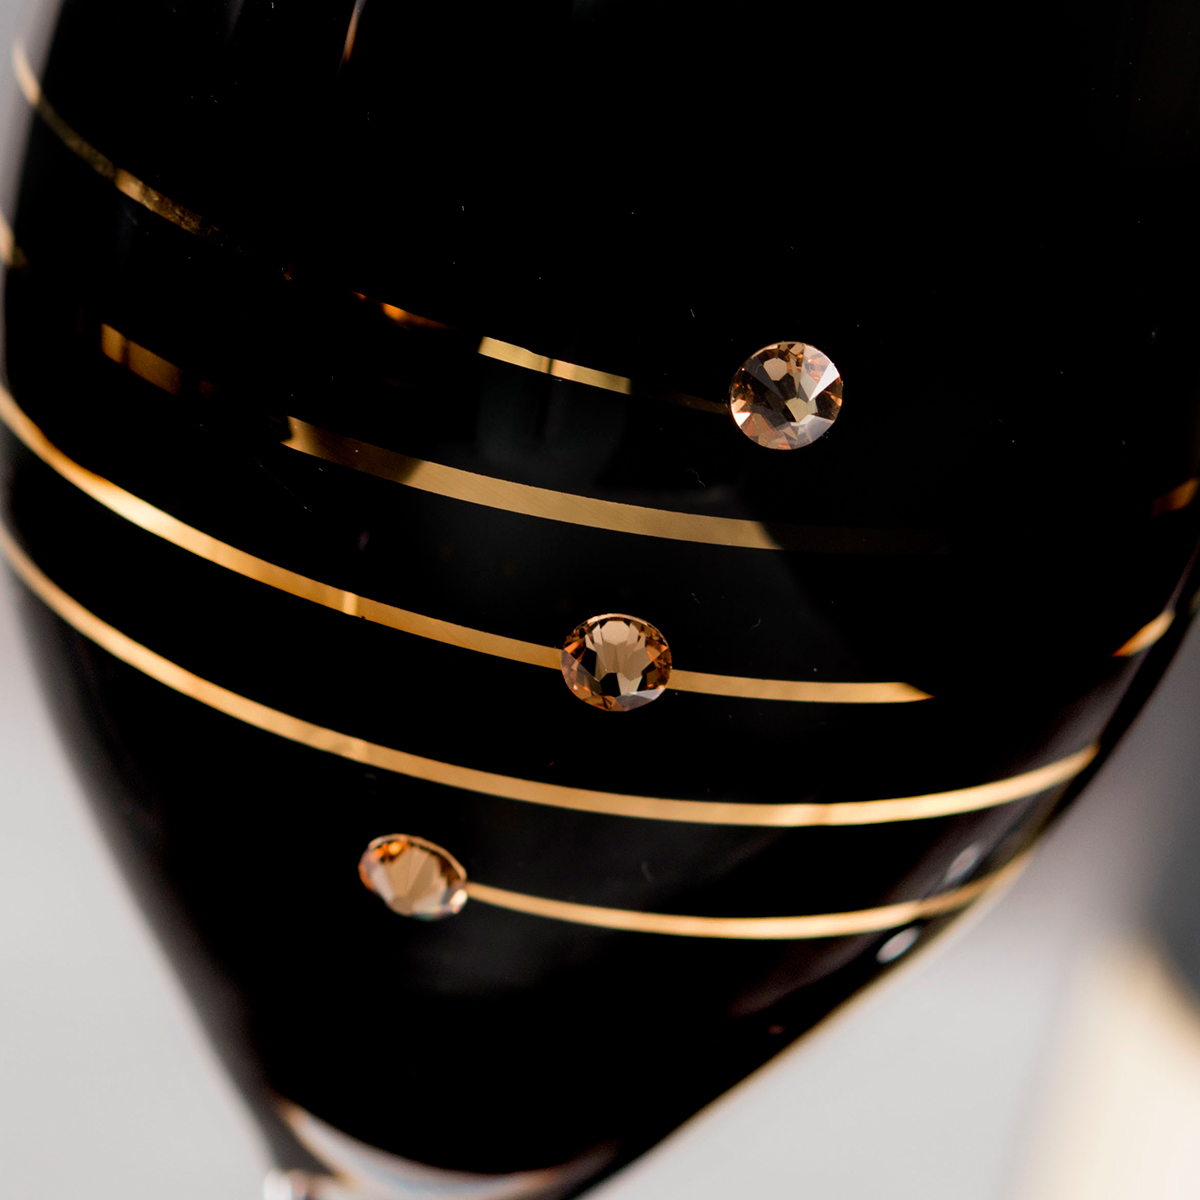 Engraved Nero Swarovski Elements Diamante Champagne Flutes